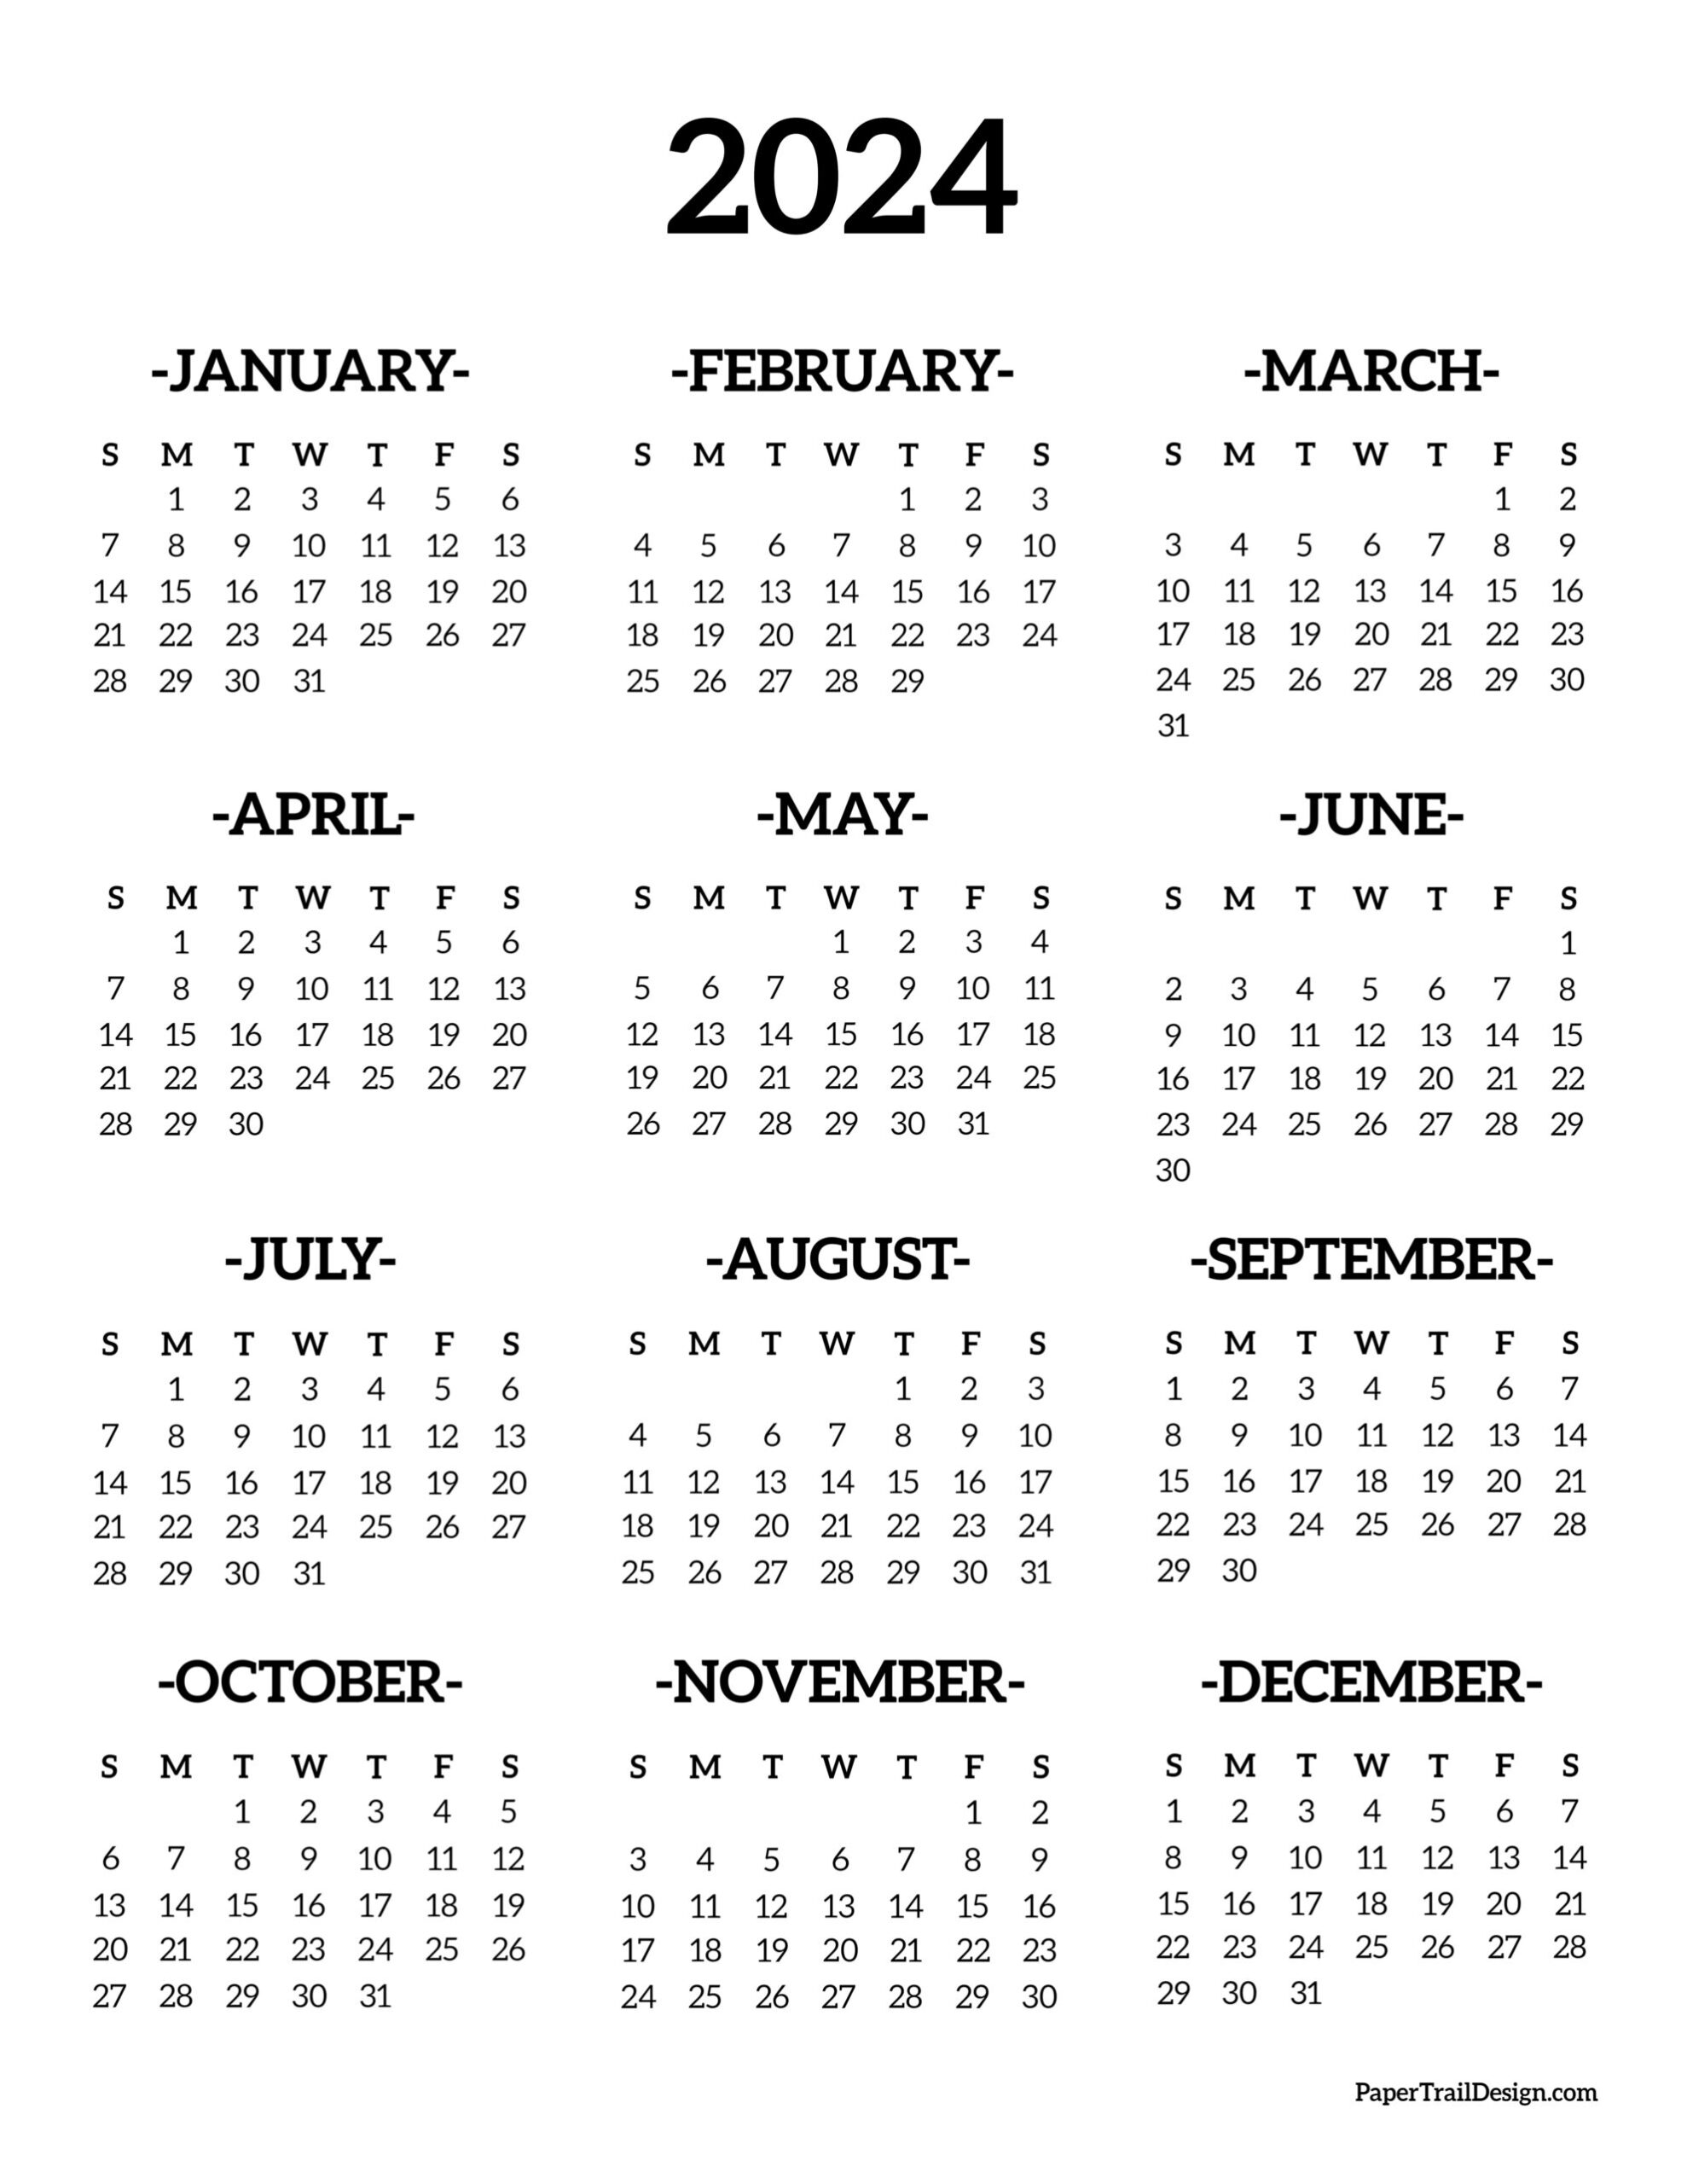 Calendar 2024 Printable One Page - Paper Trail Design for Calendar Sheets 2024 Printable